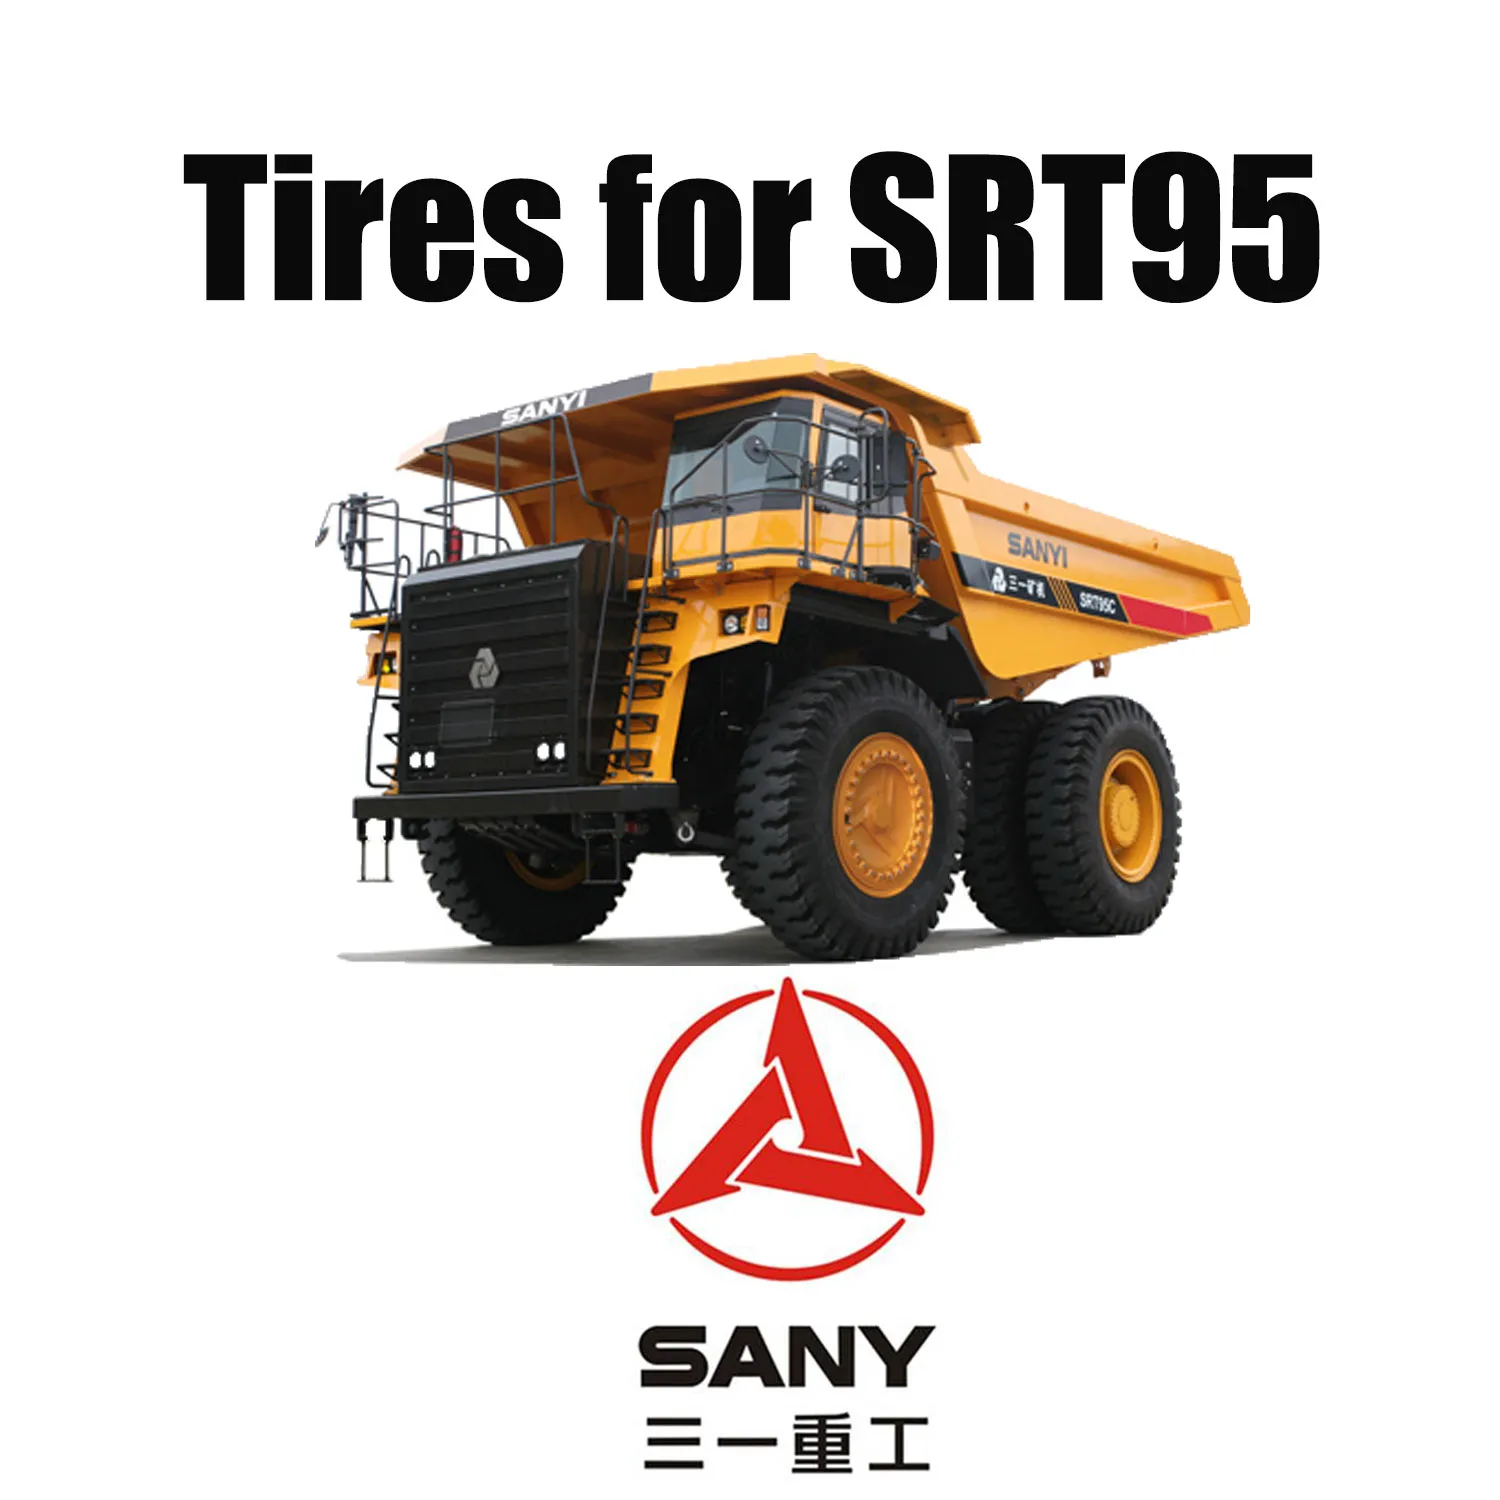 Premium Quality Giant Earthmover Tires 27.00R49 for Surface Mining Trucks SANY SRT95